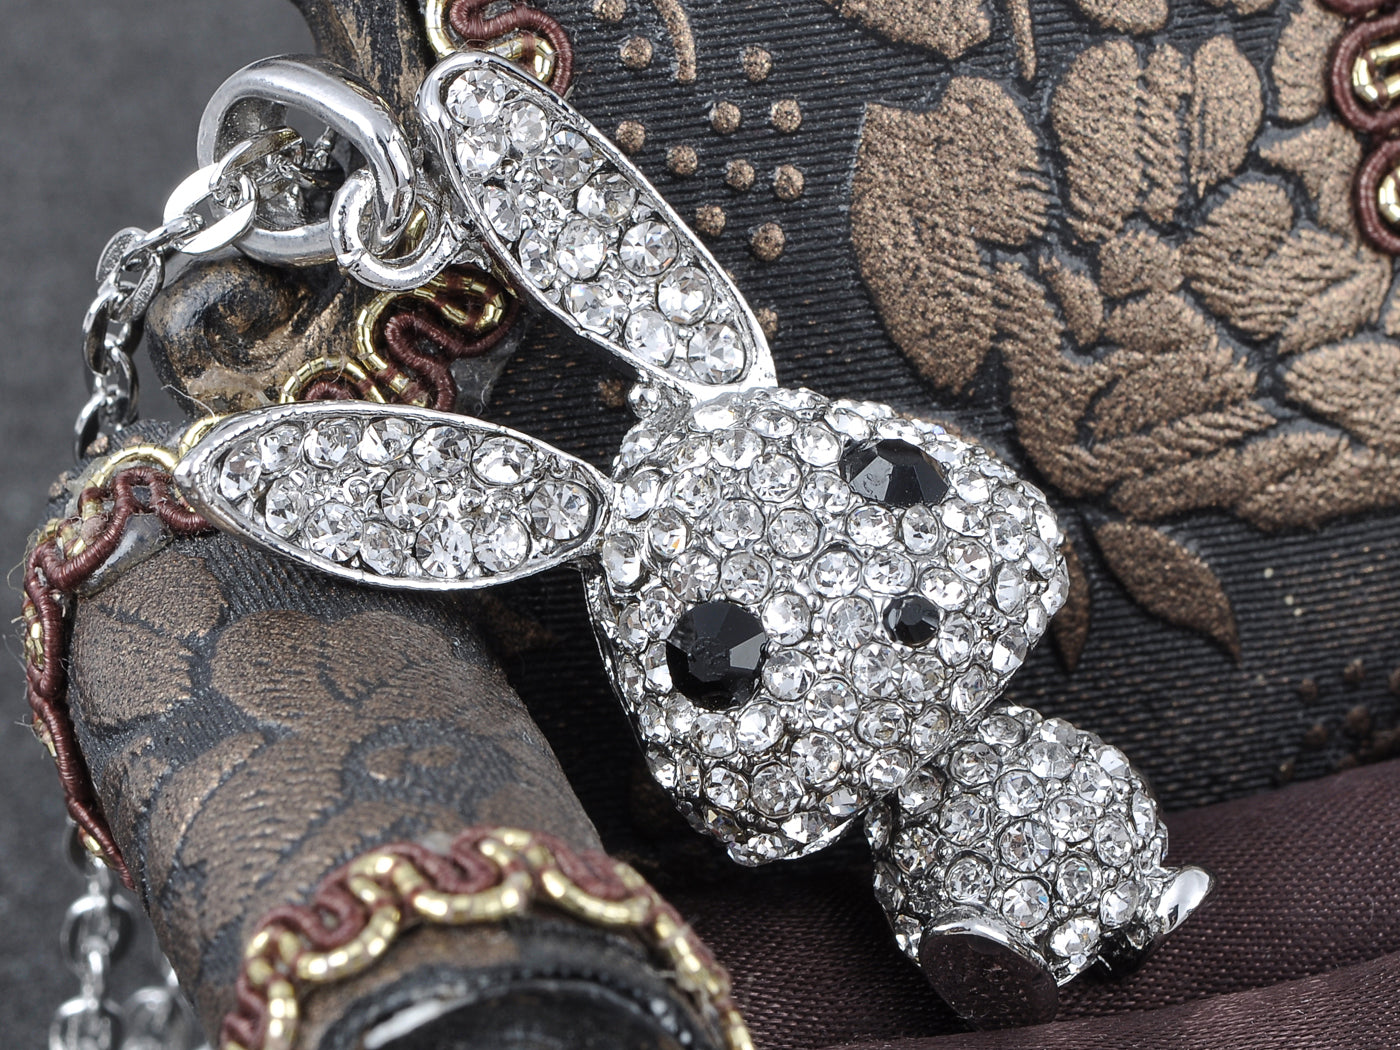 Bobble Anime Bunny Rabbit Pendant Necklace